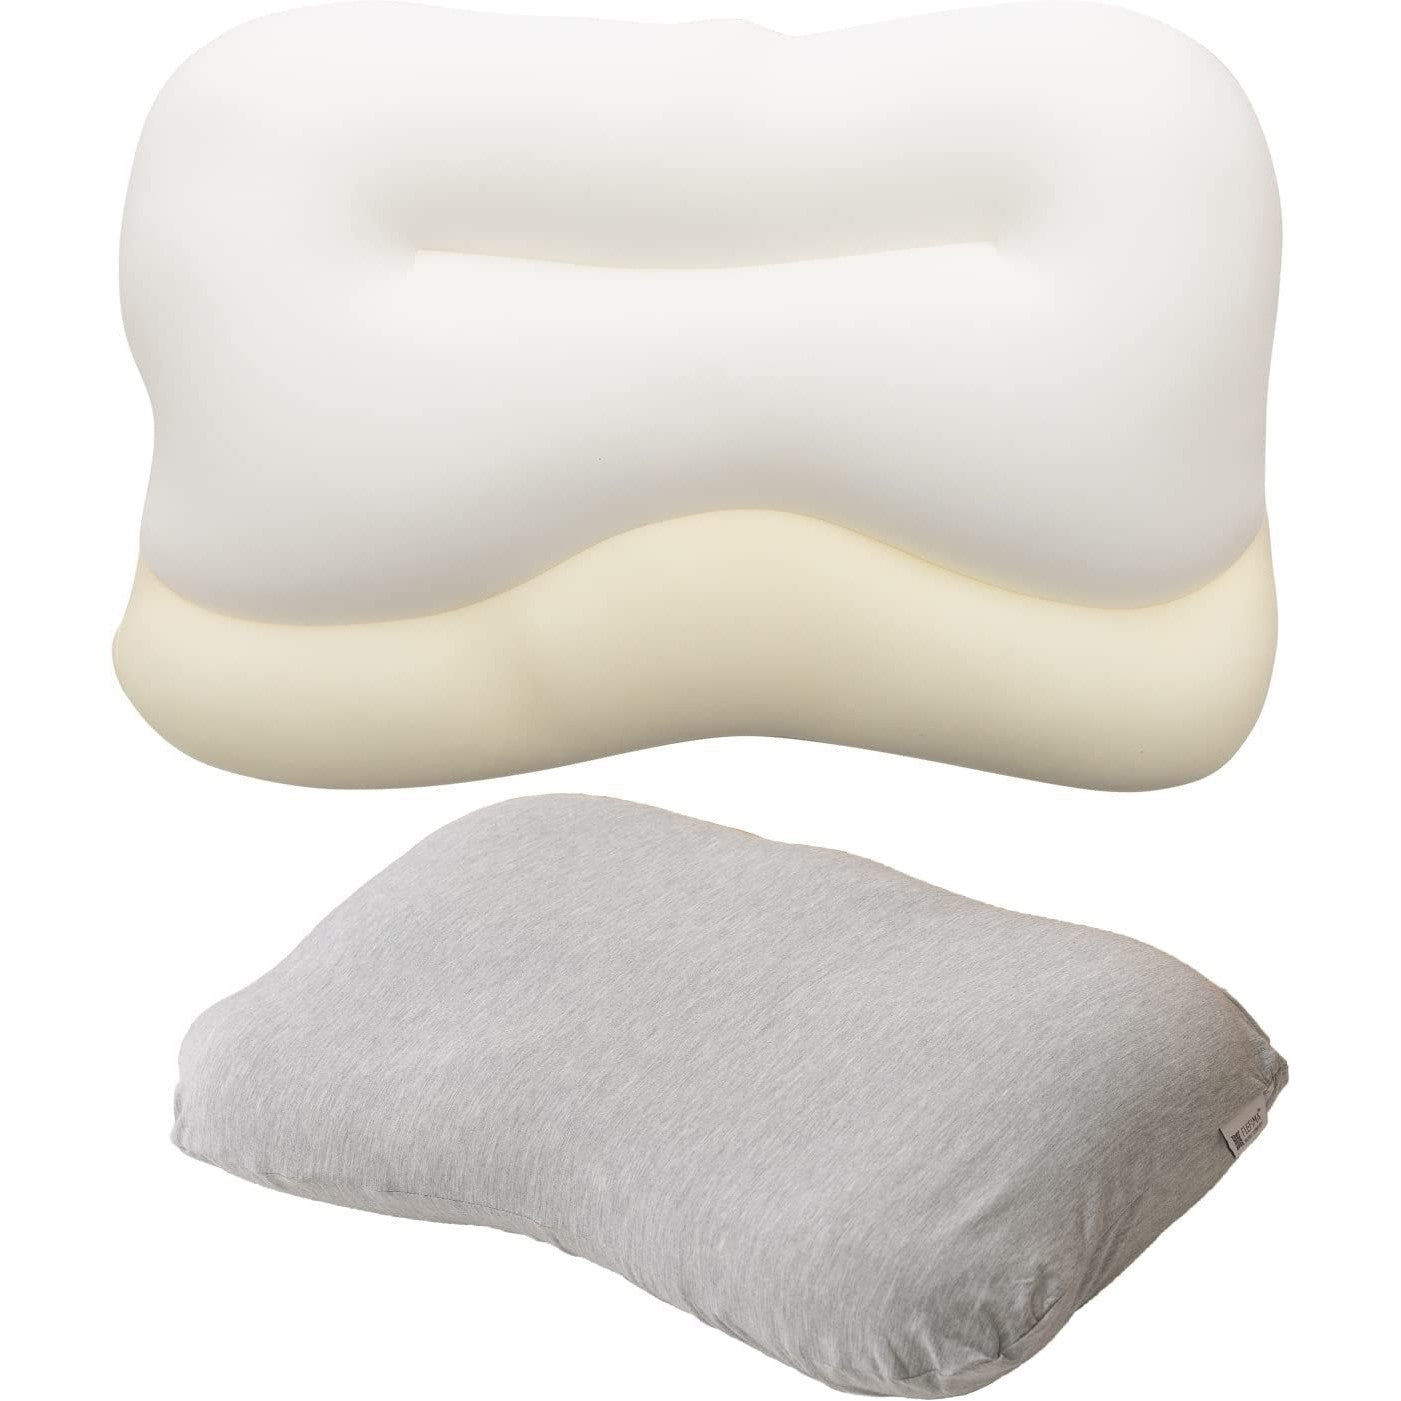 Polyurethane Foam Pillow (Made in Japan)